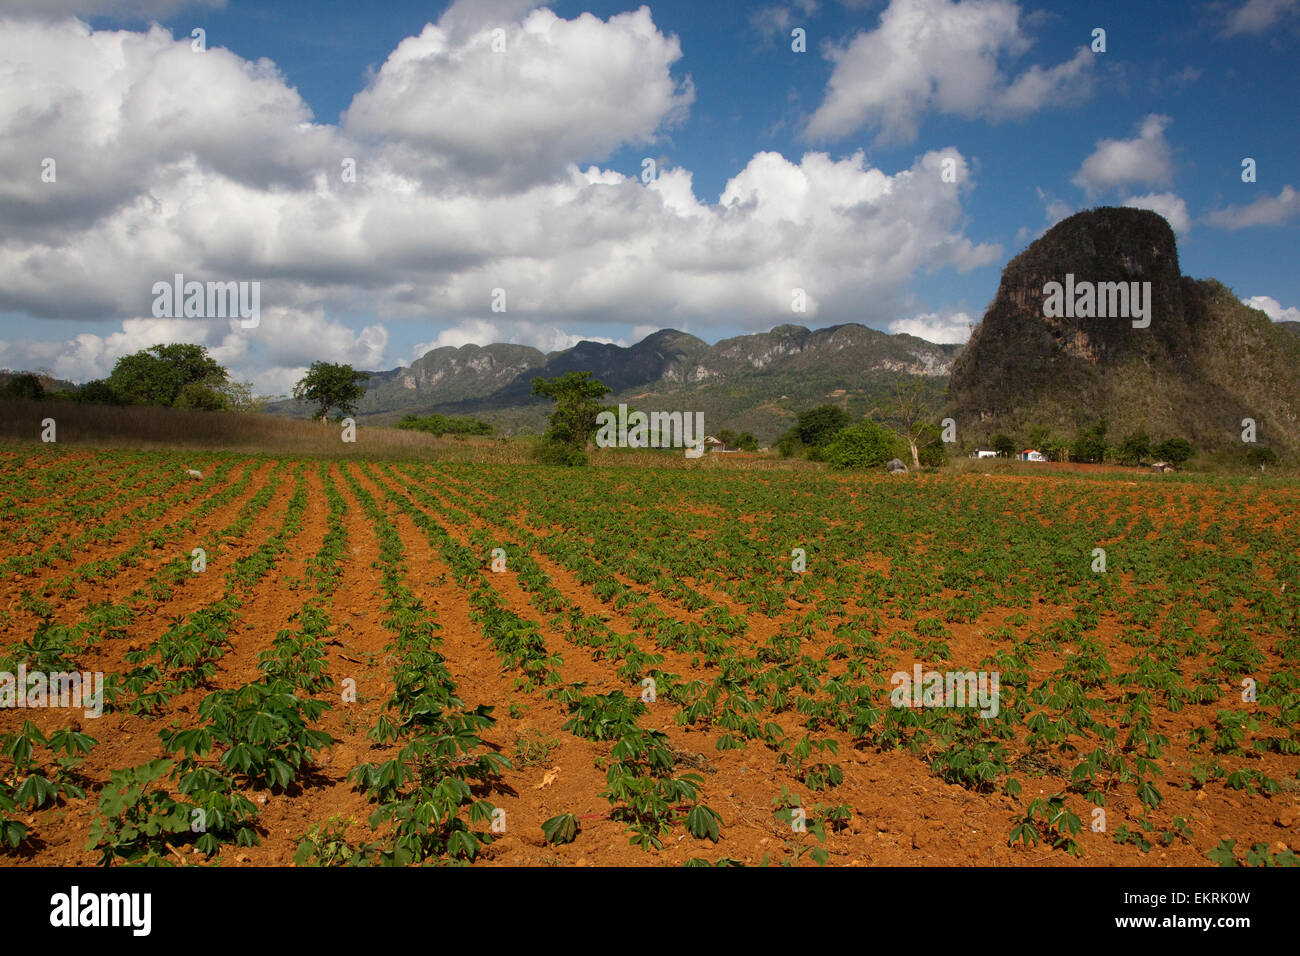 Les terres agricoles de Vinales, Cuba avec les cultures et les plantations de tabac Banque D'Images